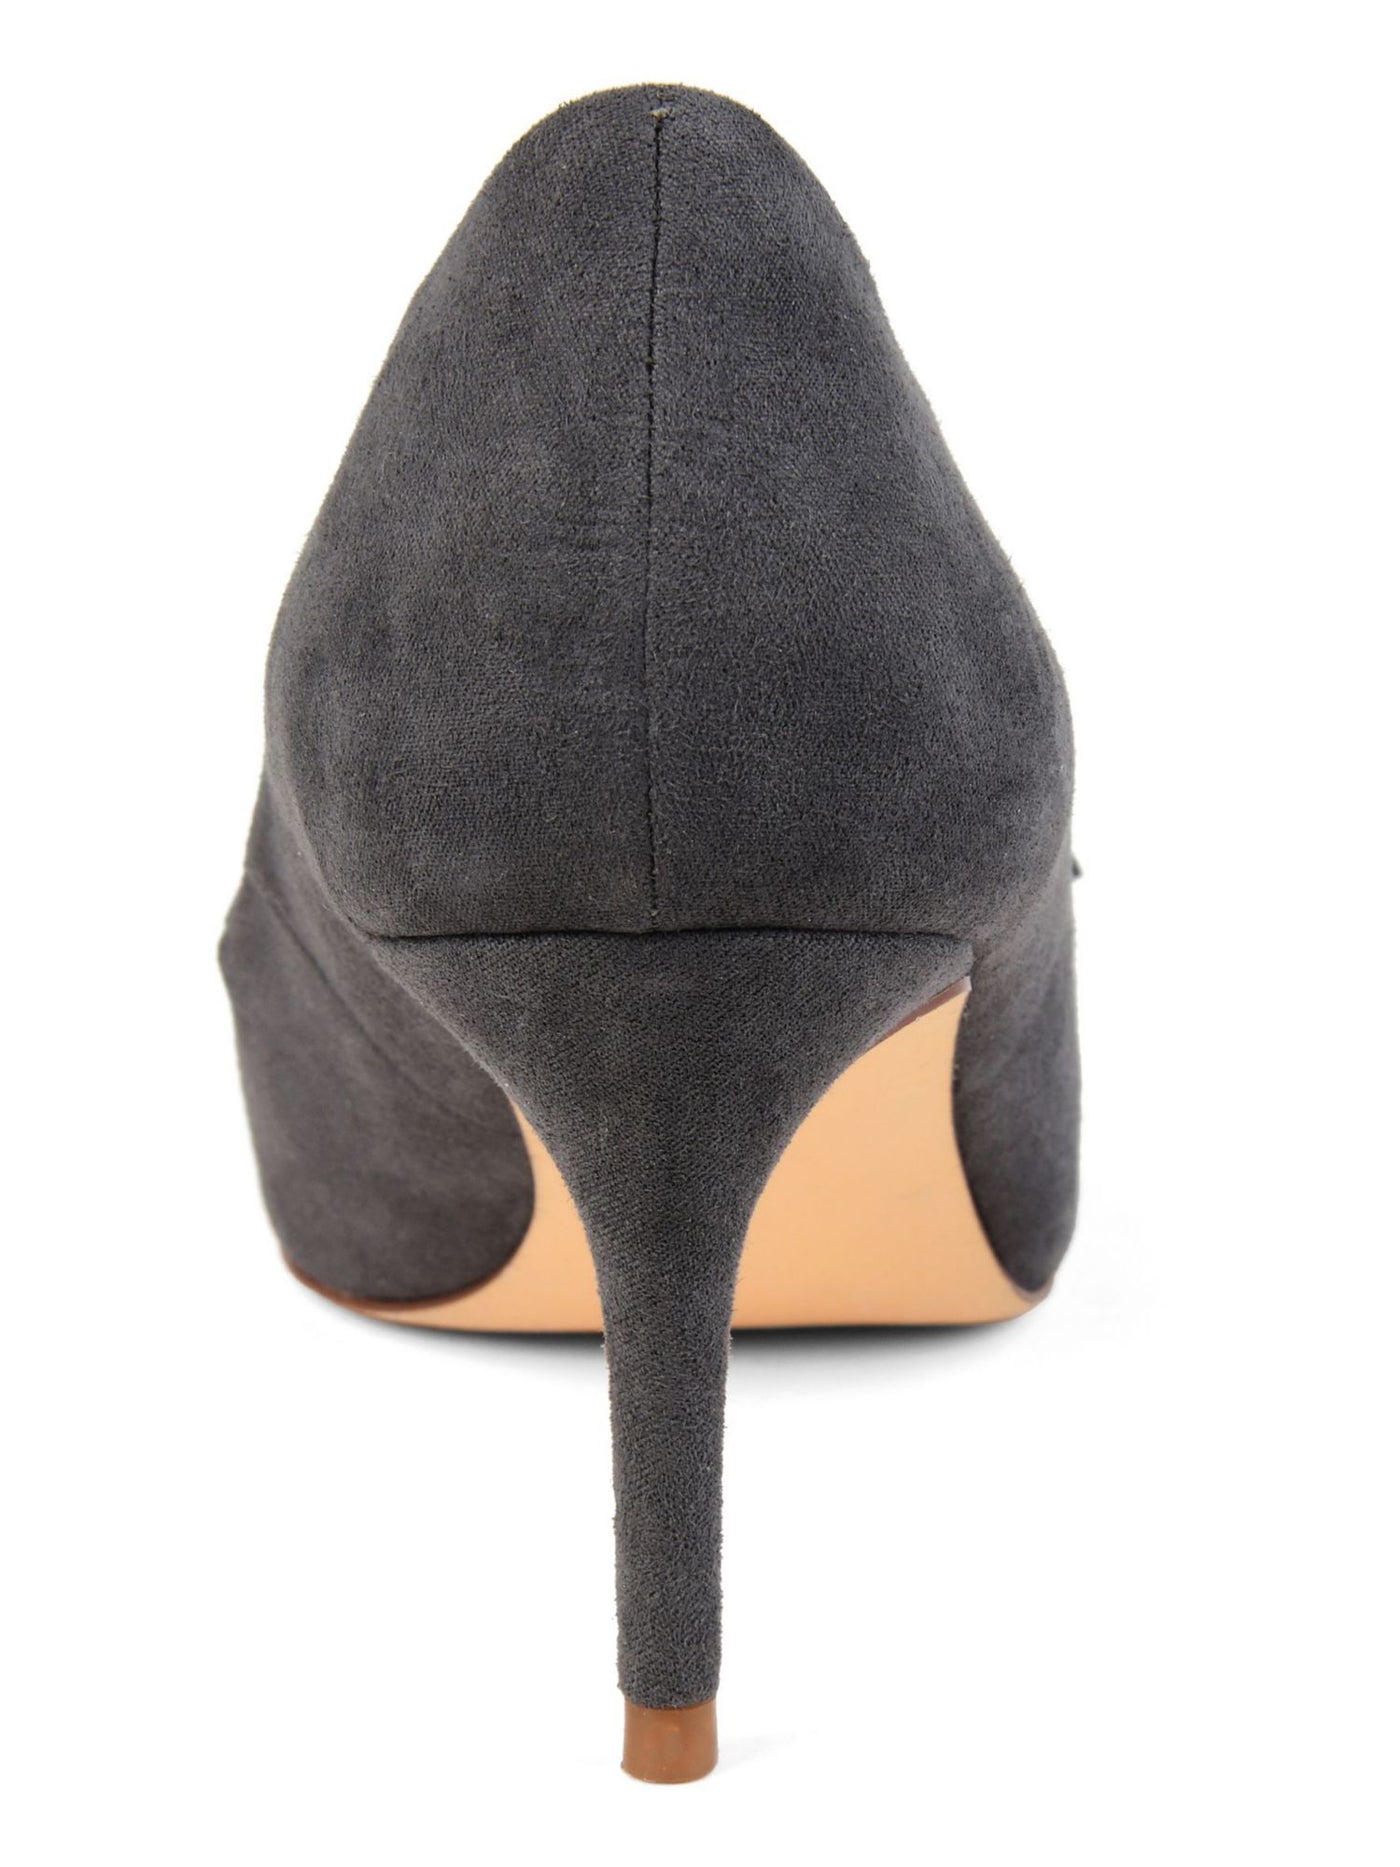 JOURNEE COLLECTION Womens Gray Ruffled Metallic Marek Pointed Toe Kitten Heel Slip On Pumps Shoes 9.5 M